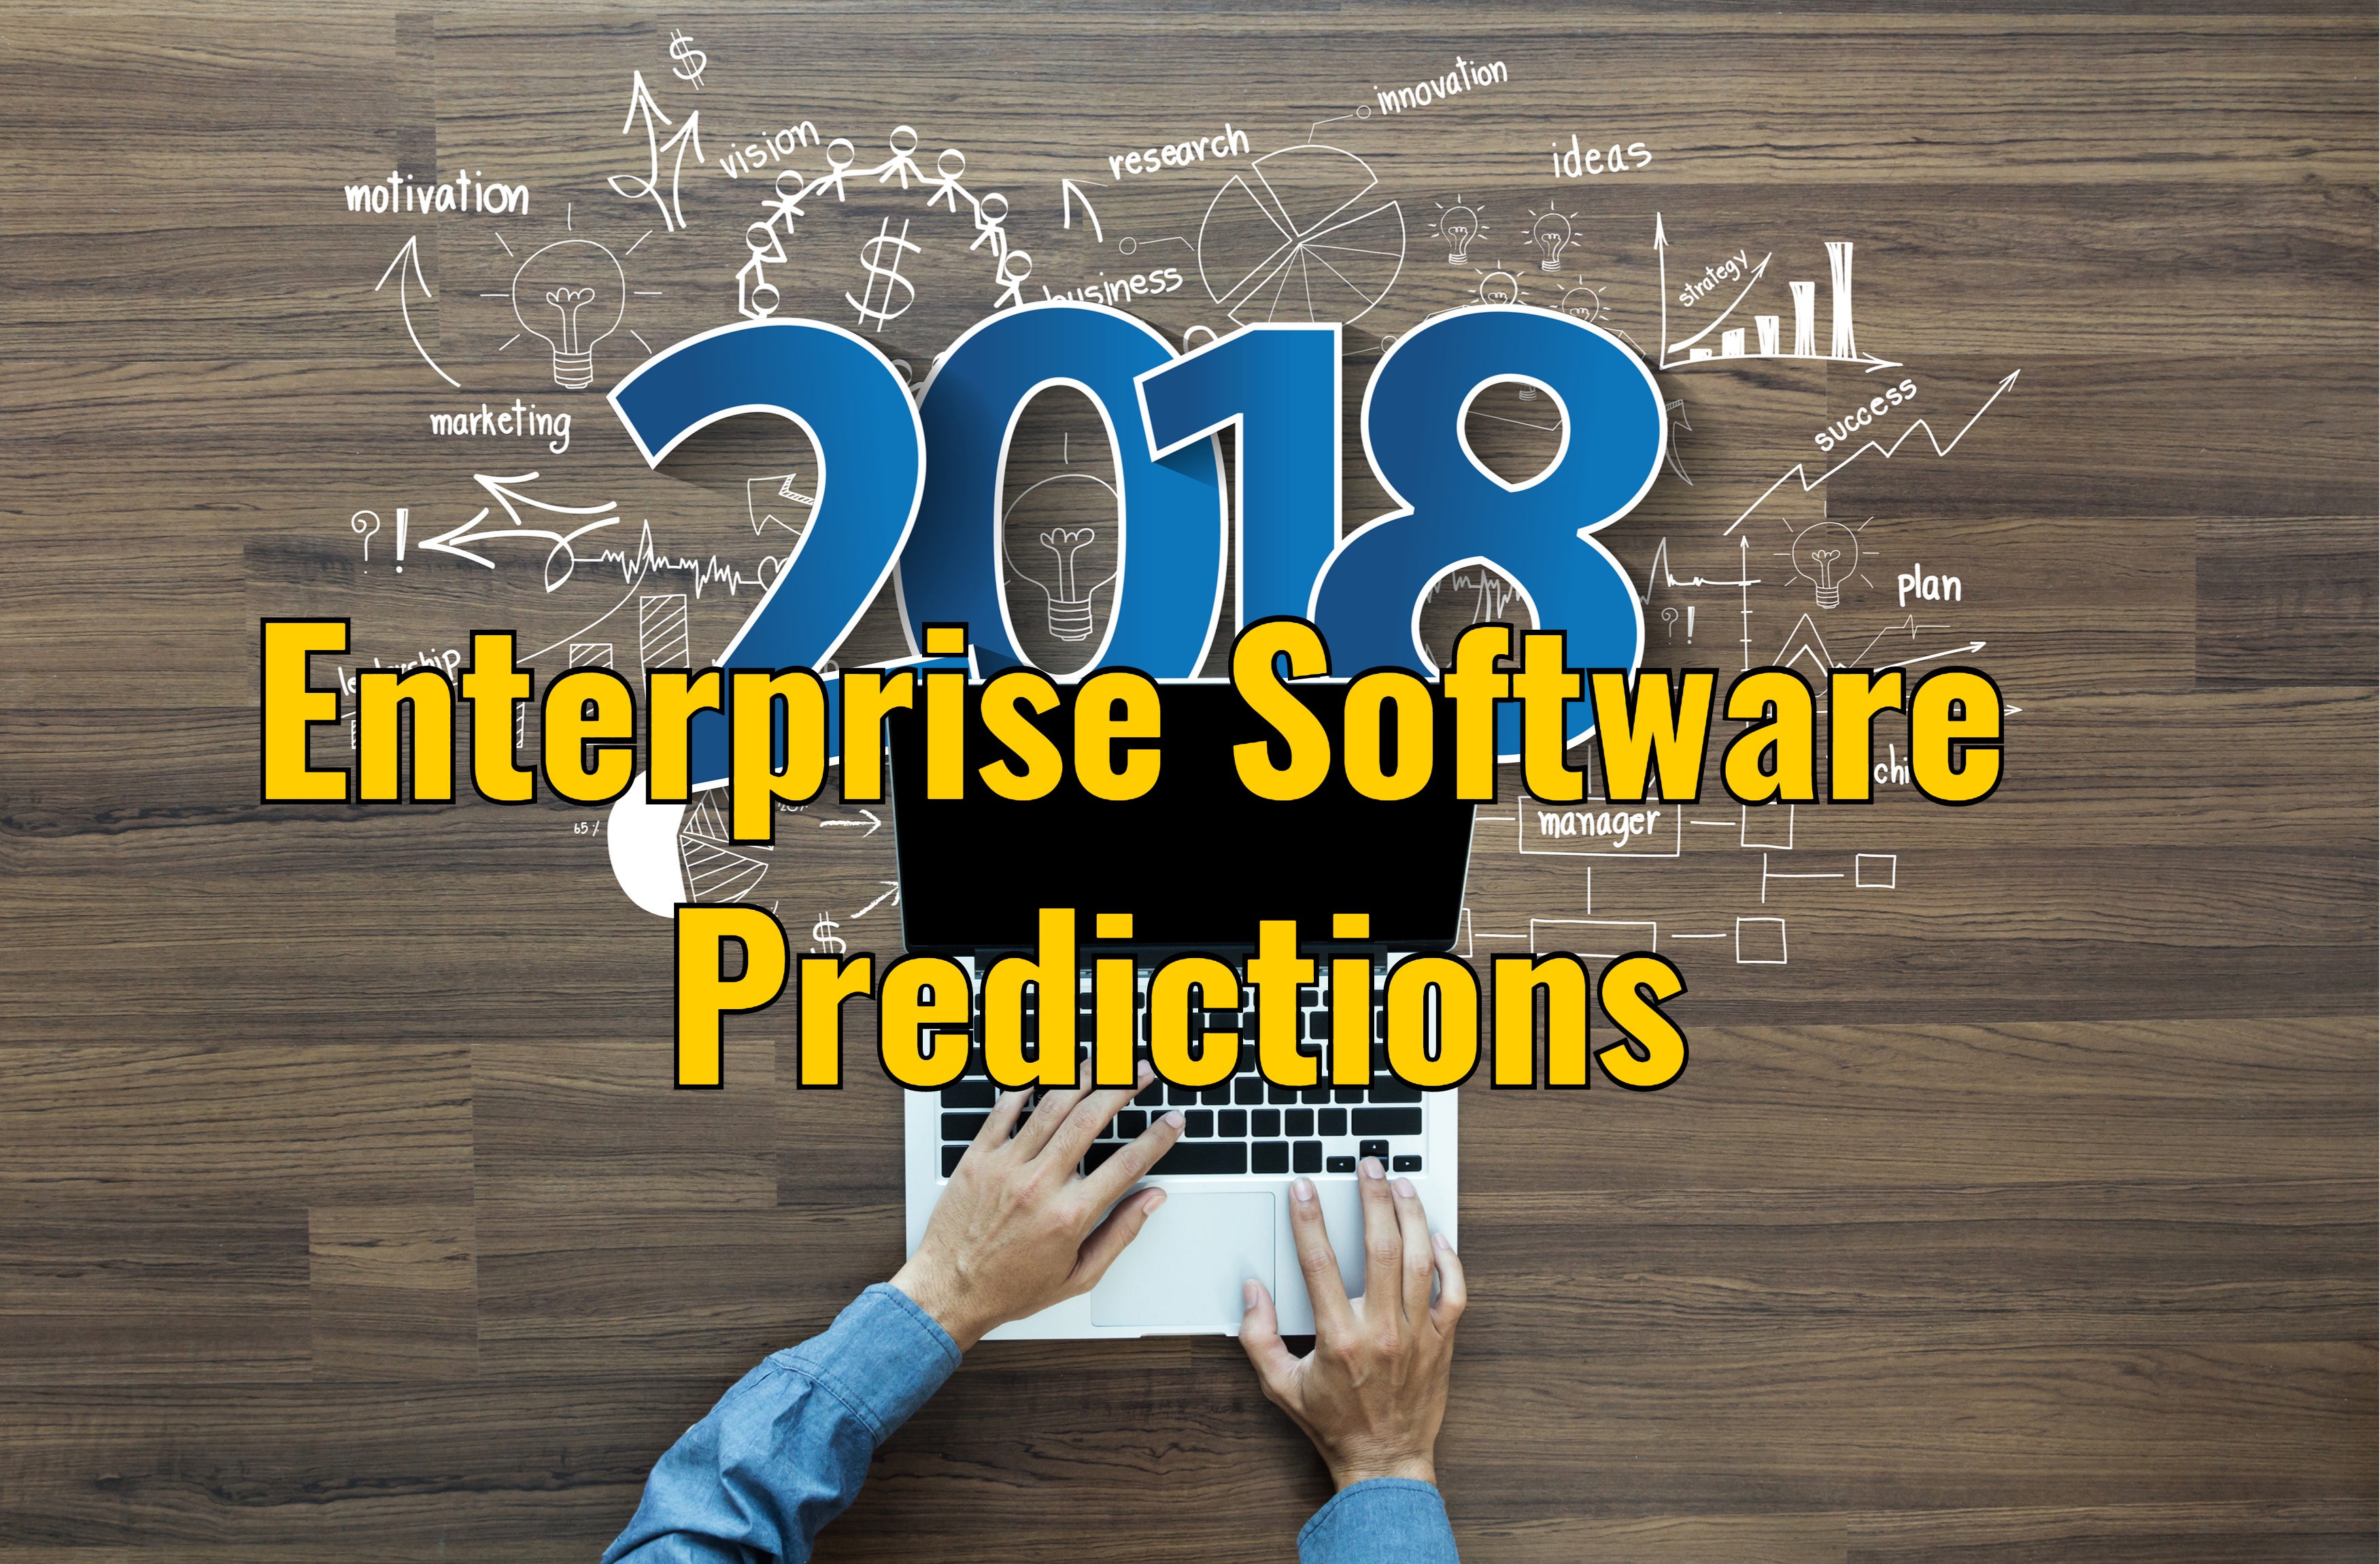 Enterprise Software Predictions 2018